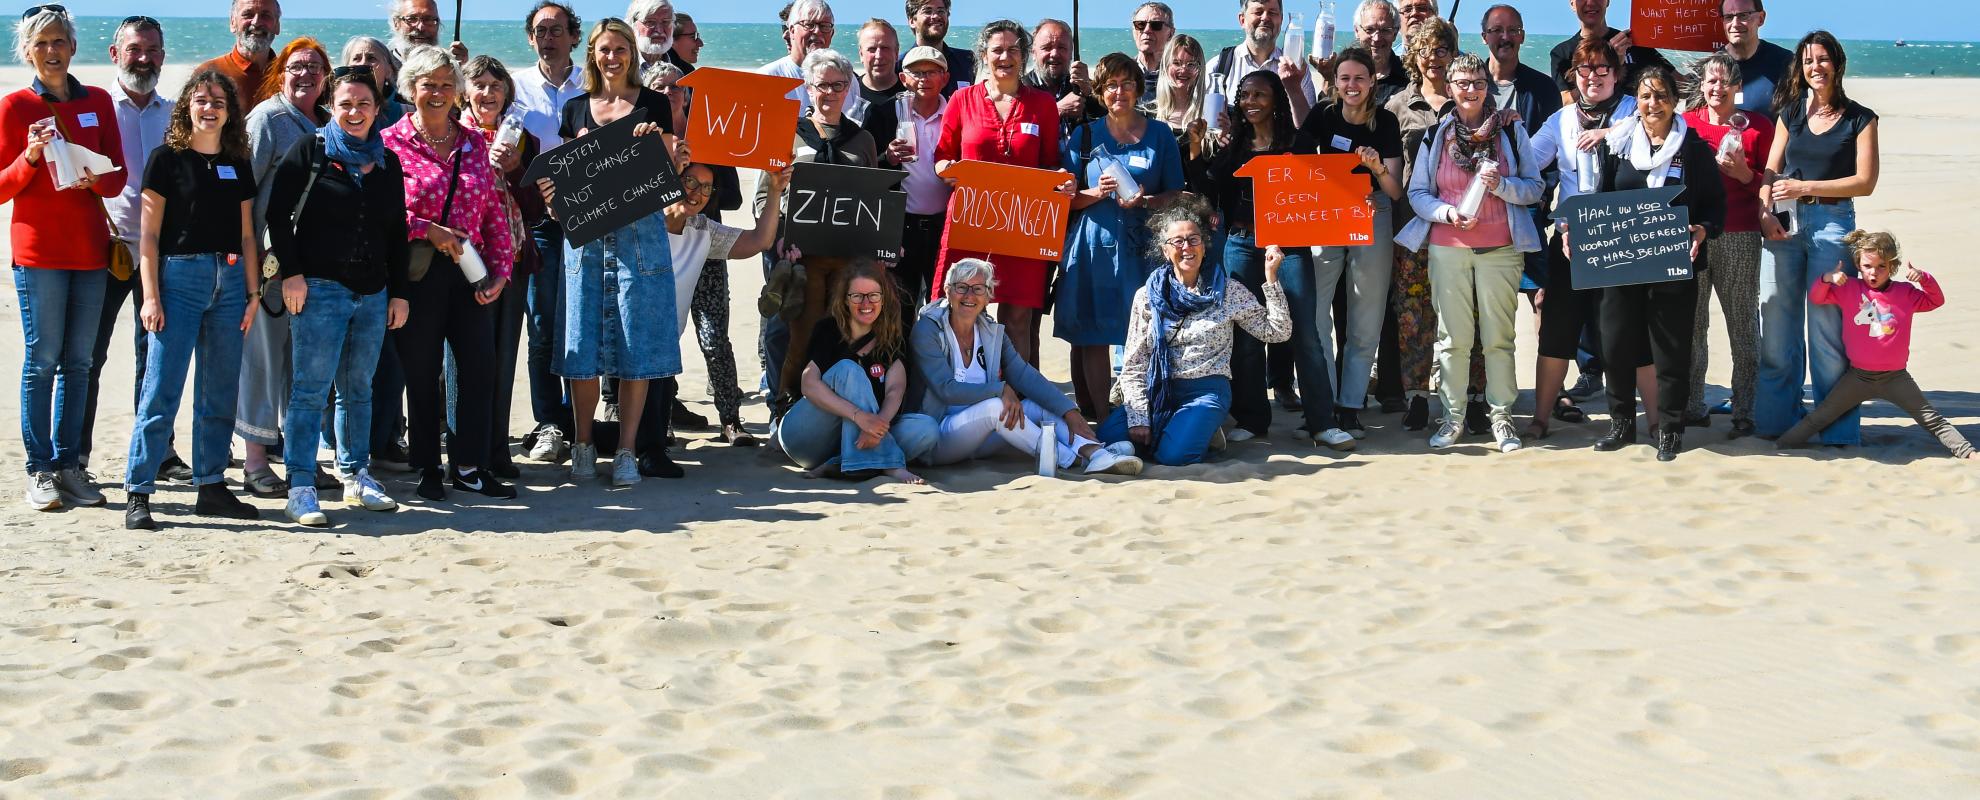 Groepsfoto van alle deelnemers op het strand